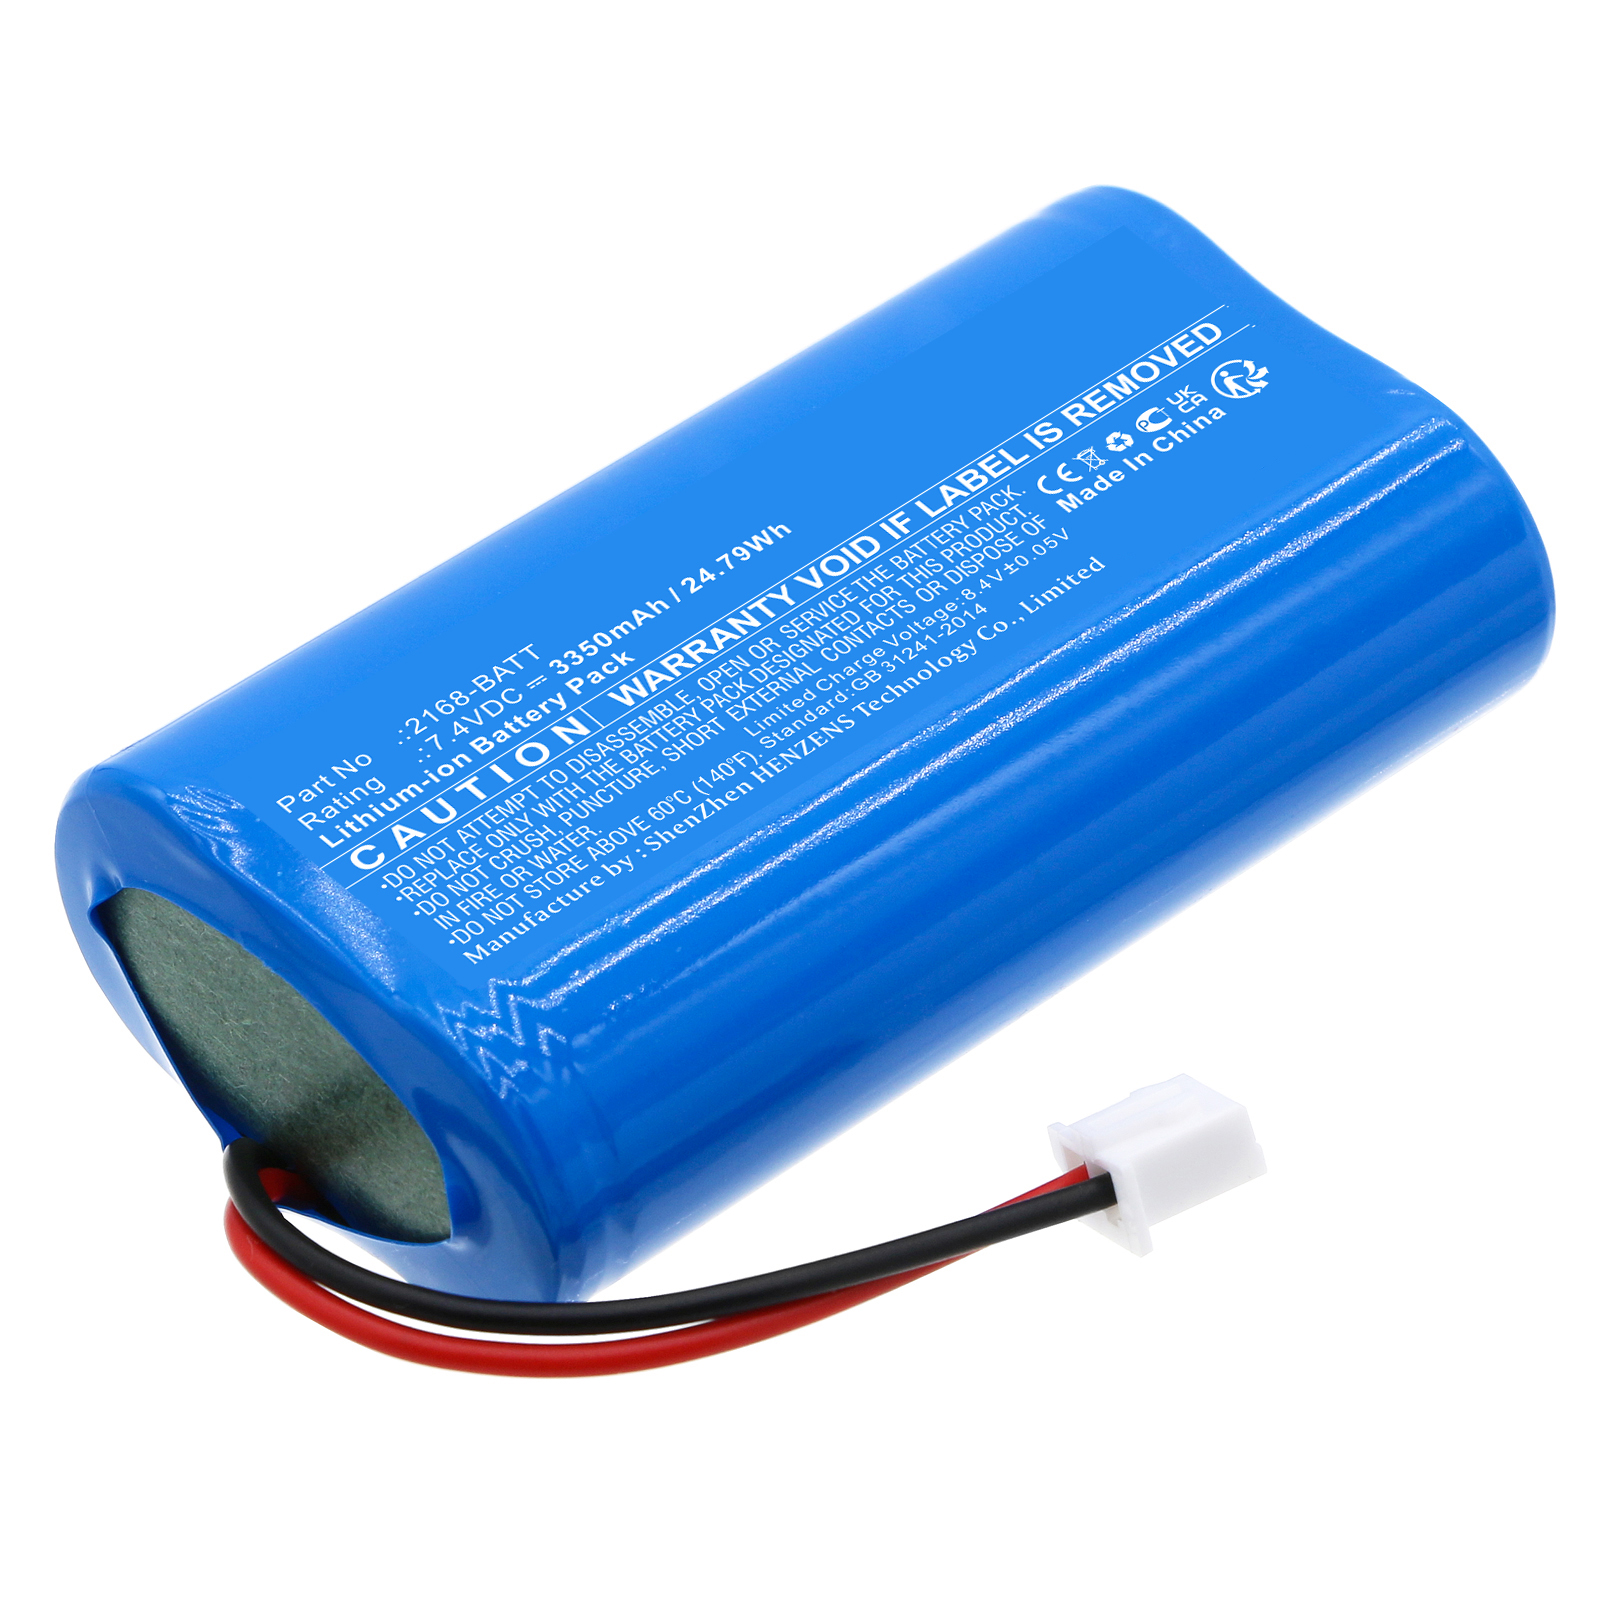 Synergy Digital Flashlight Battery, Compatible with Nightstick 2168-BATT Flashlight Battery (Li-ion, 7.4V, 3350mAh)